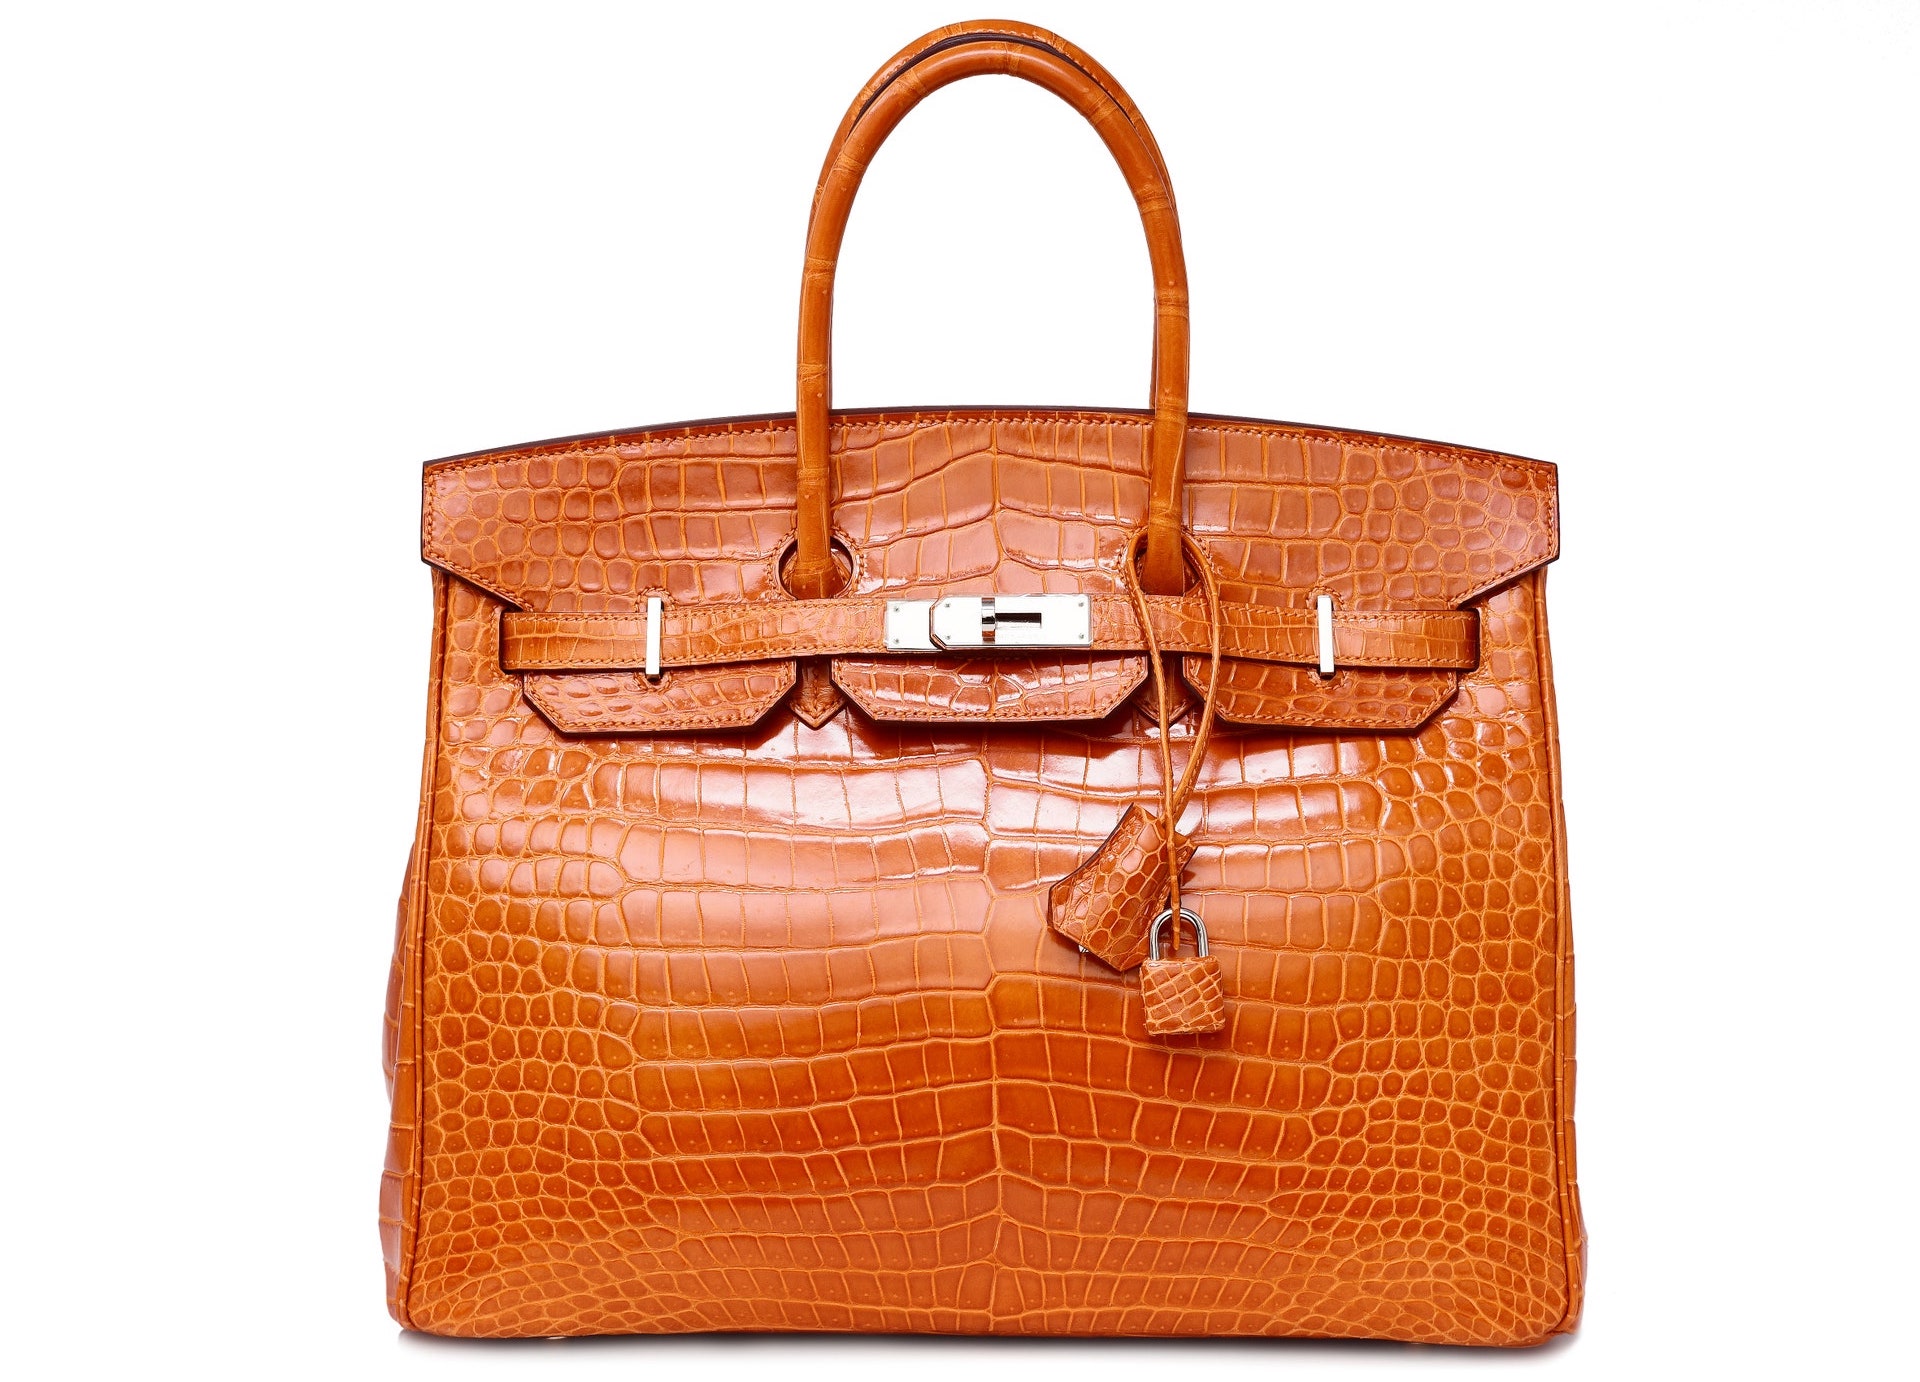 Rare Hermès Birkin bag set to fetch upwards of £30,000 at auction